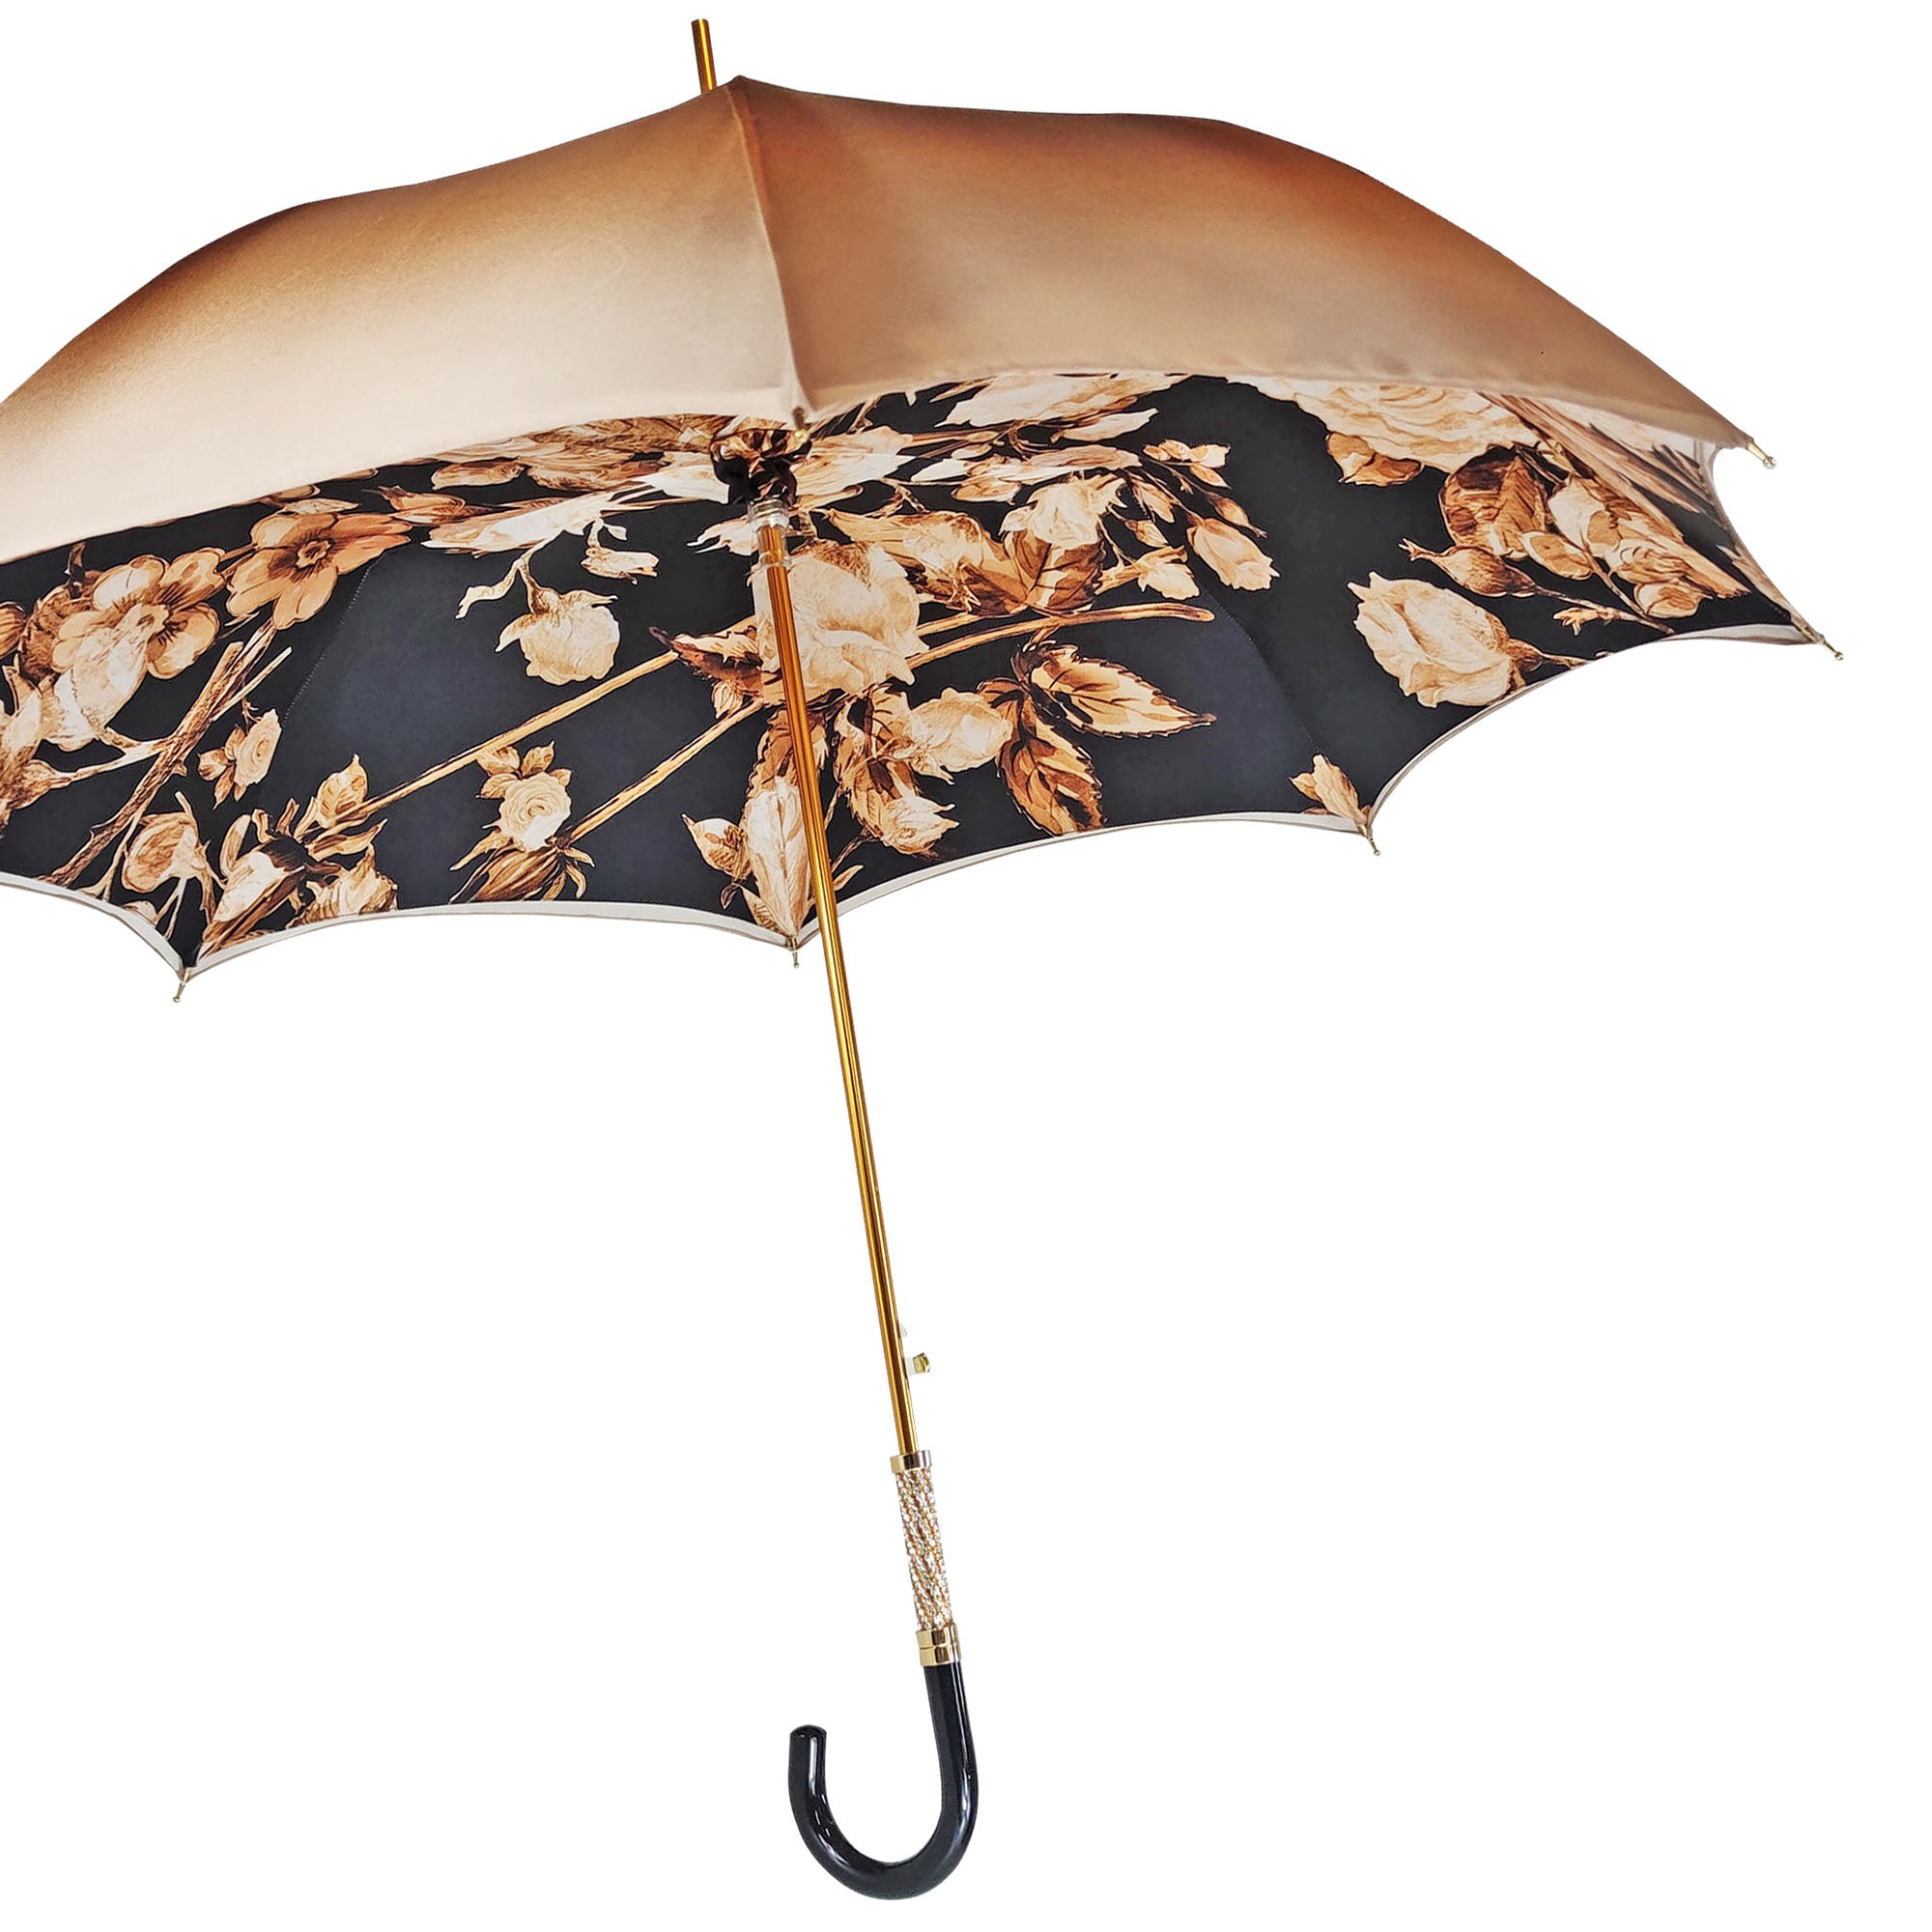 Elegant ladies umbrella with black and brown flowered design